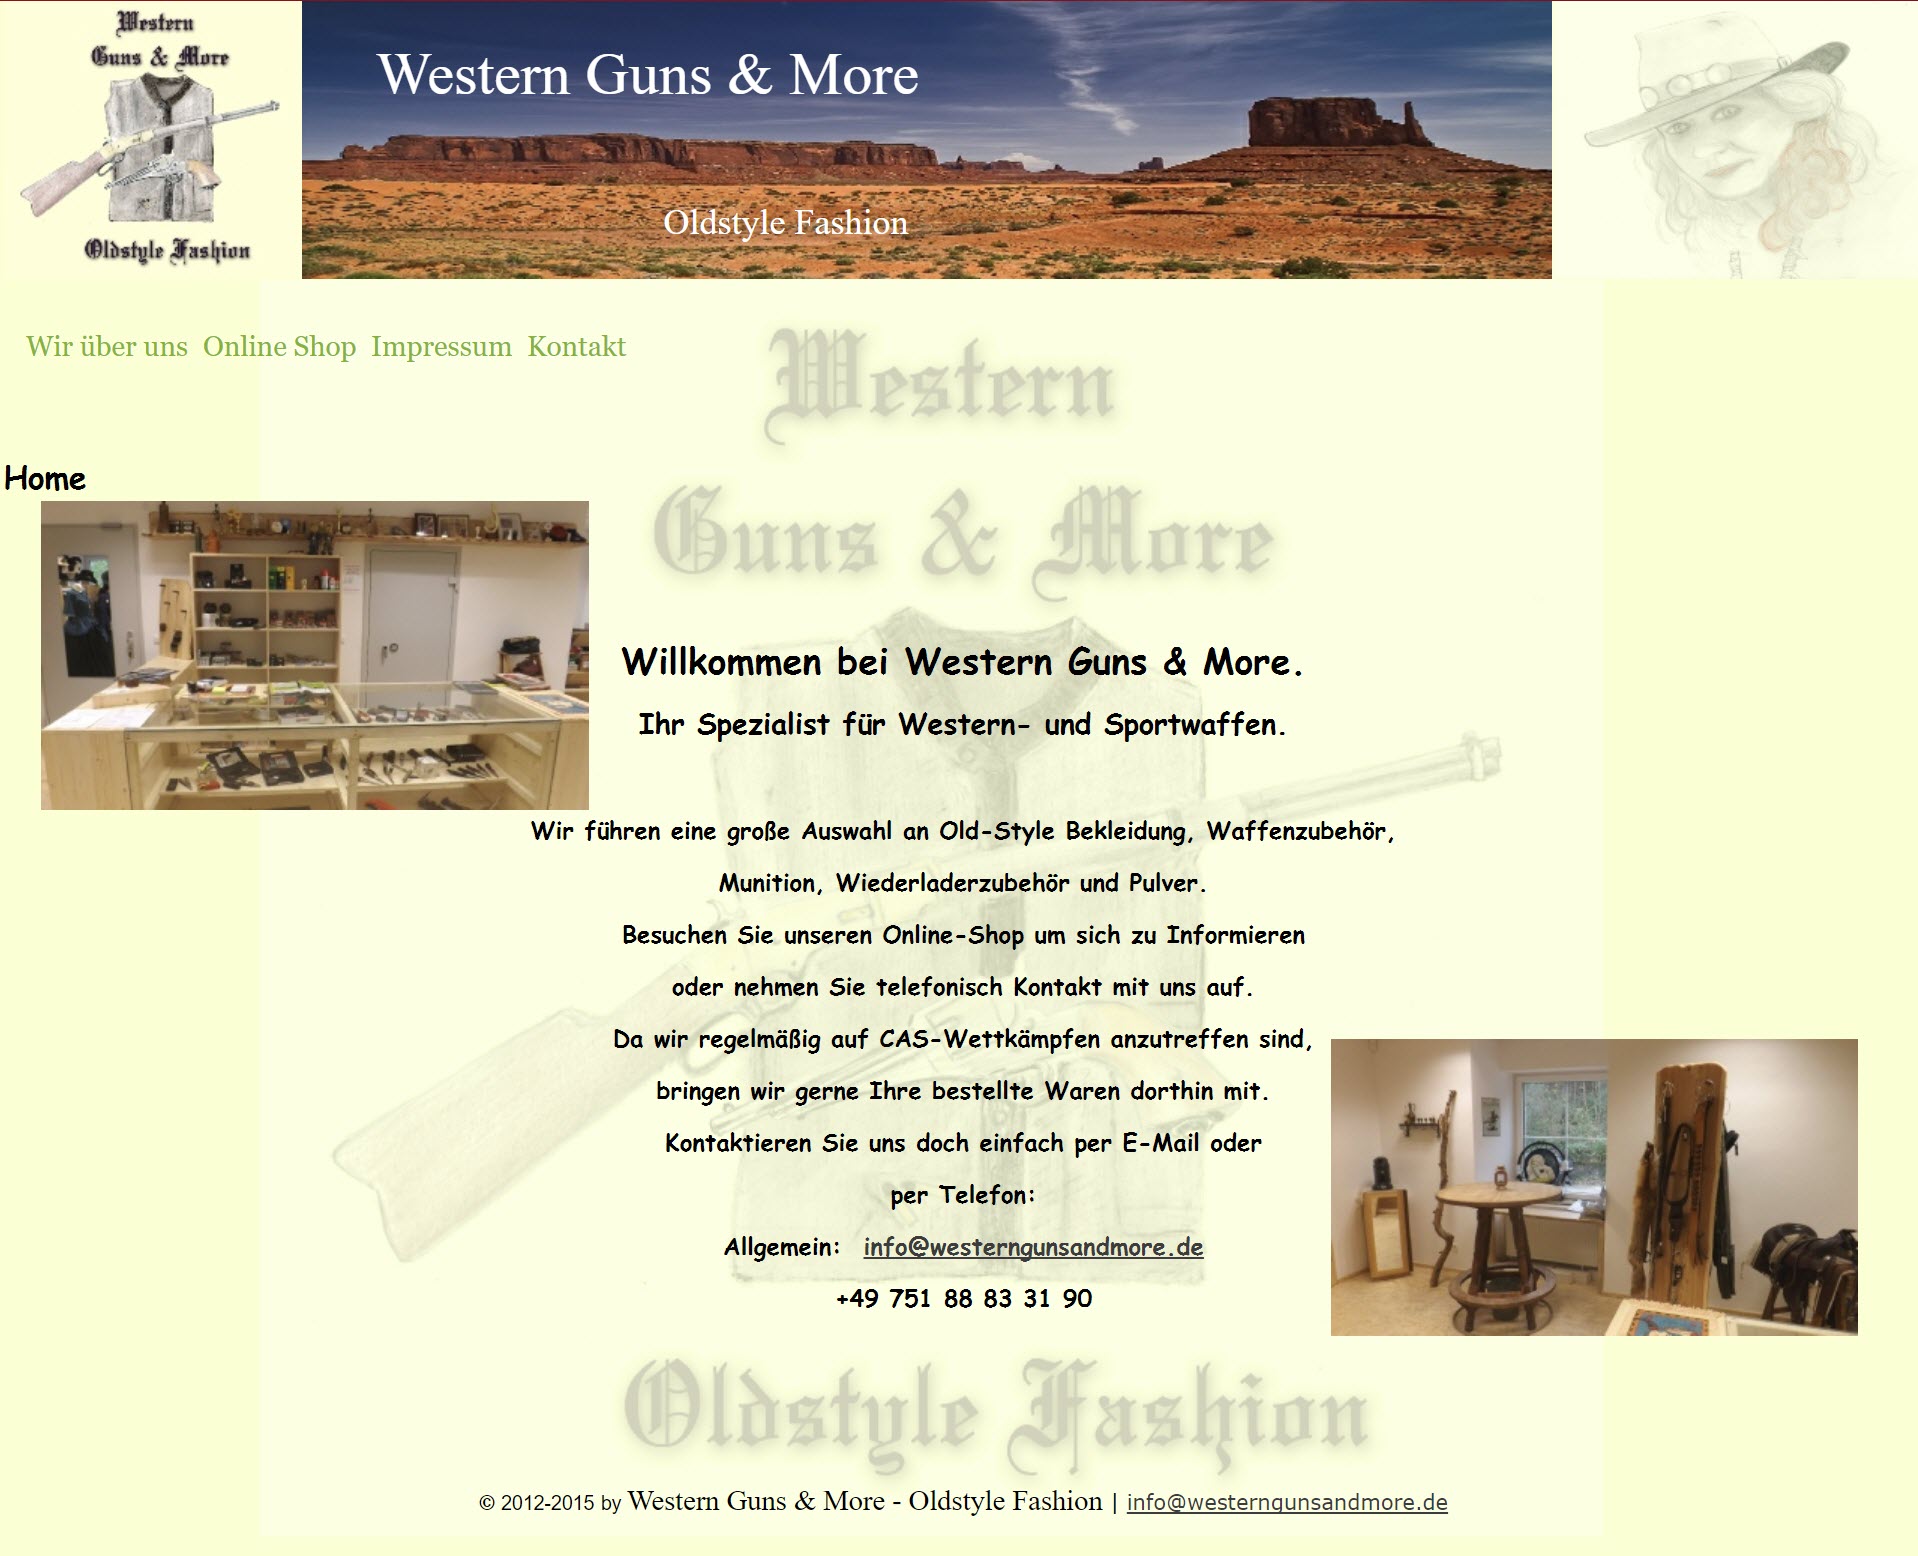 Western Guns & more